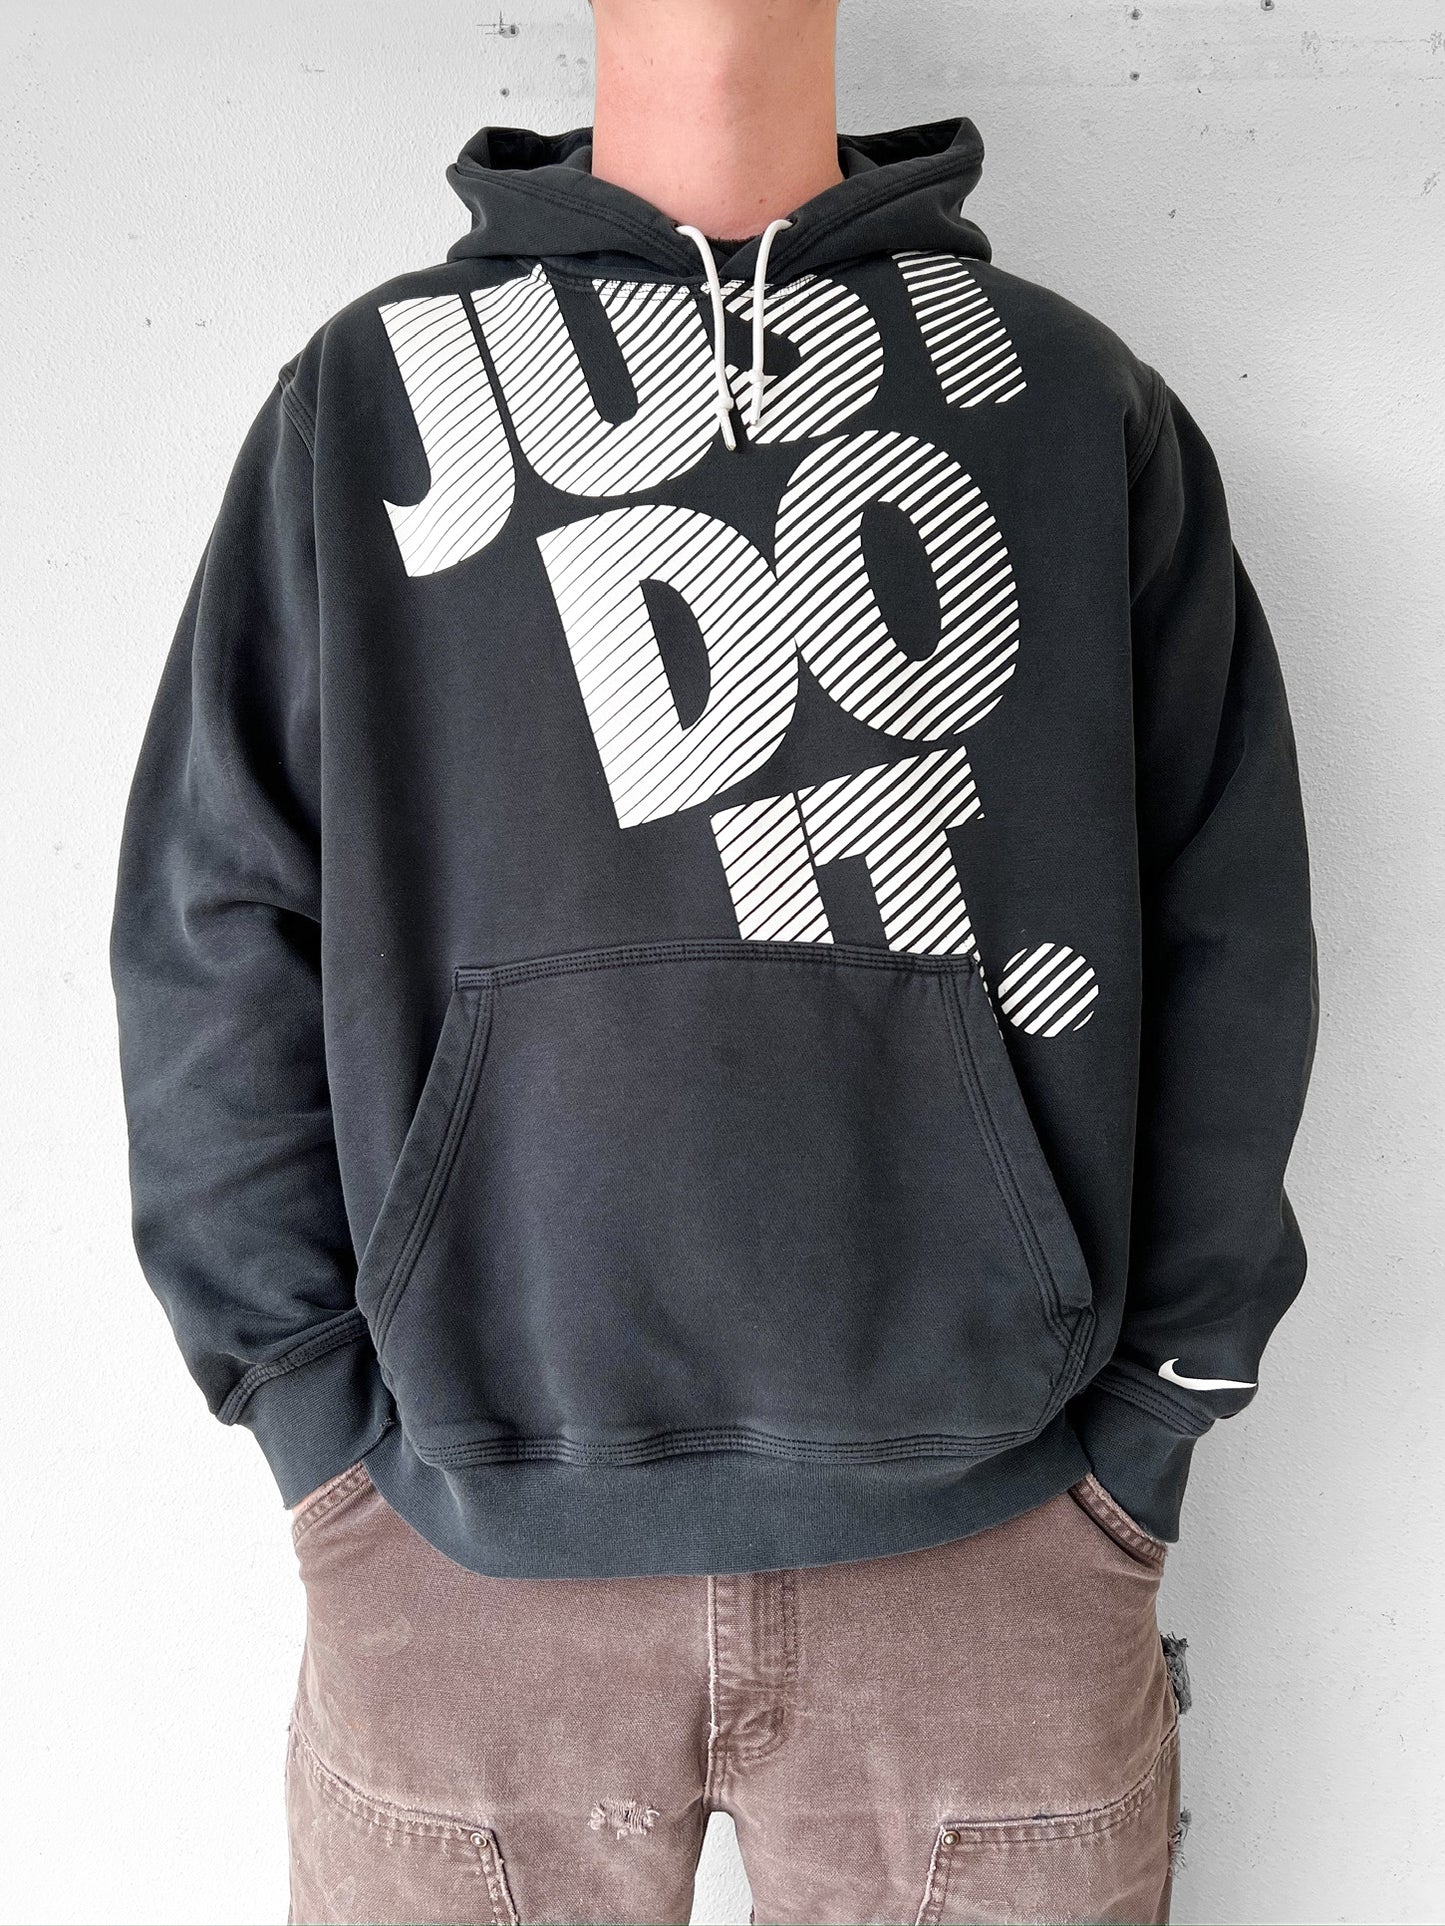 Nike Swoosh "Just Do It" Hoodie - XL